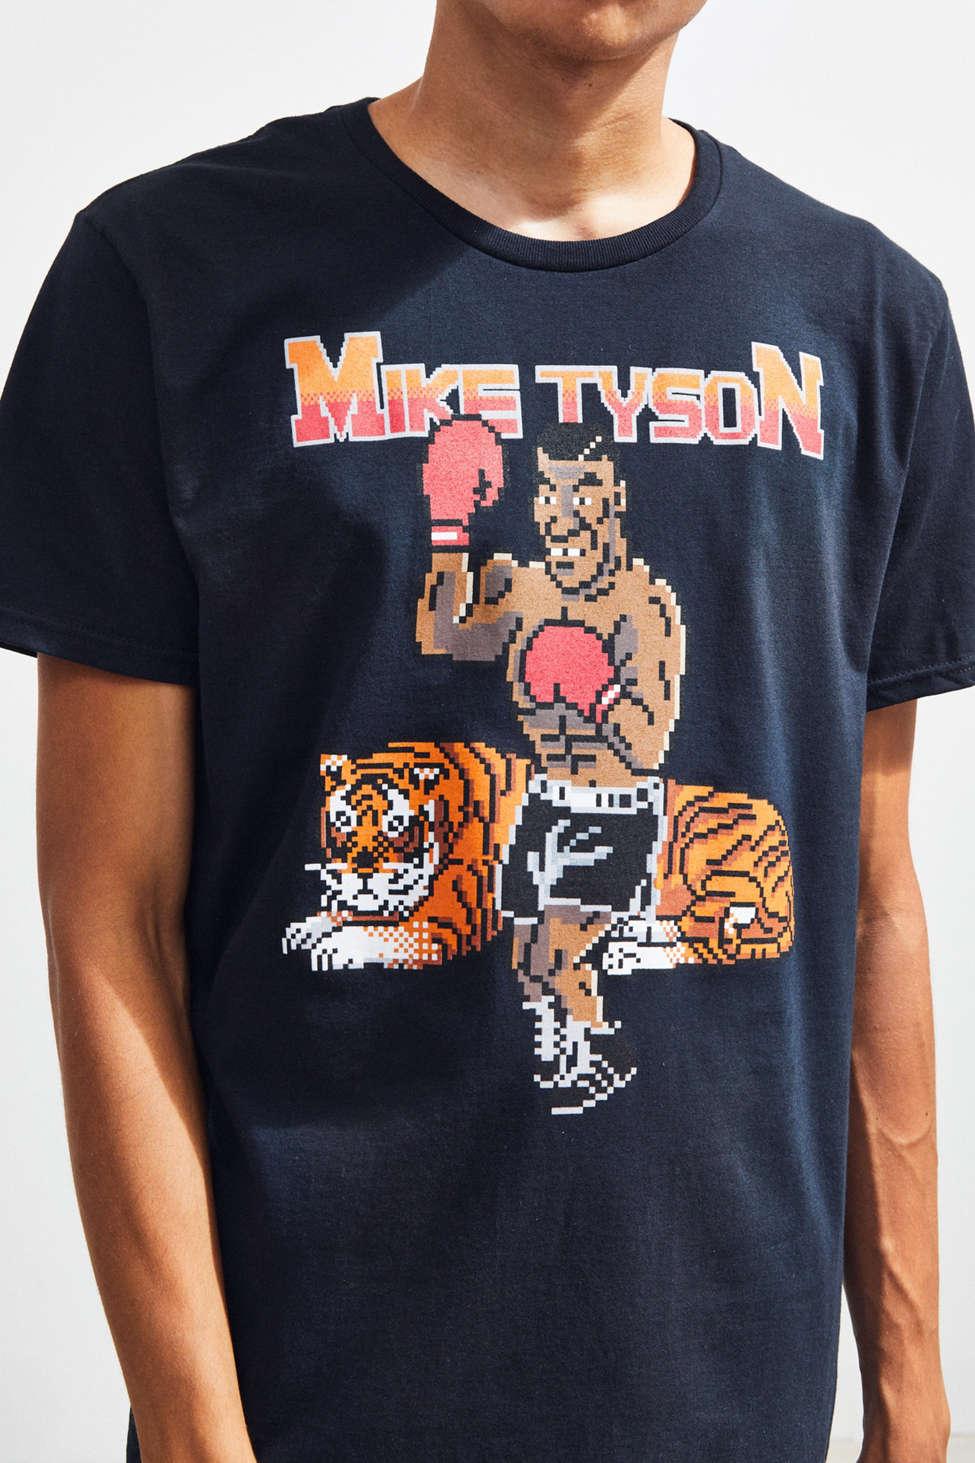 tyson tiger t shirt